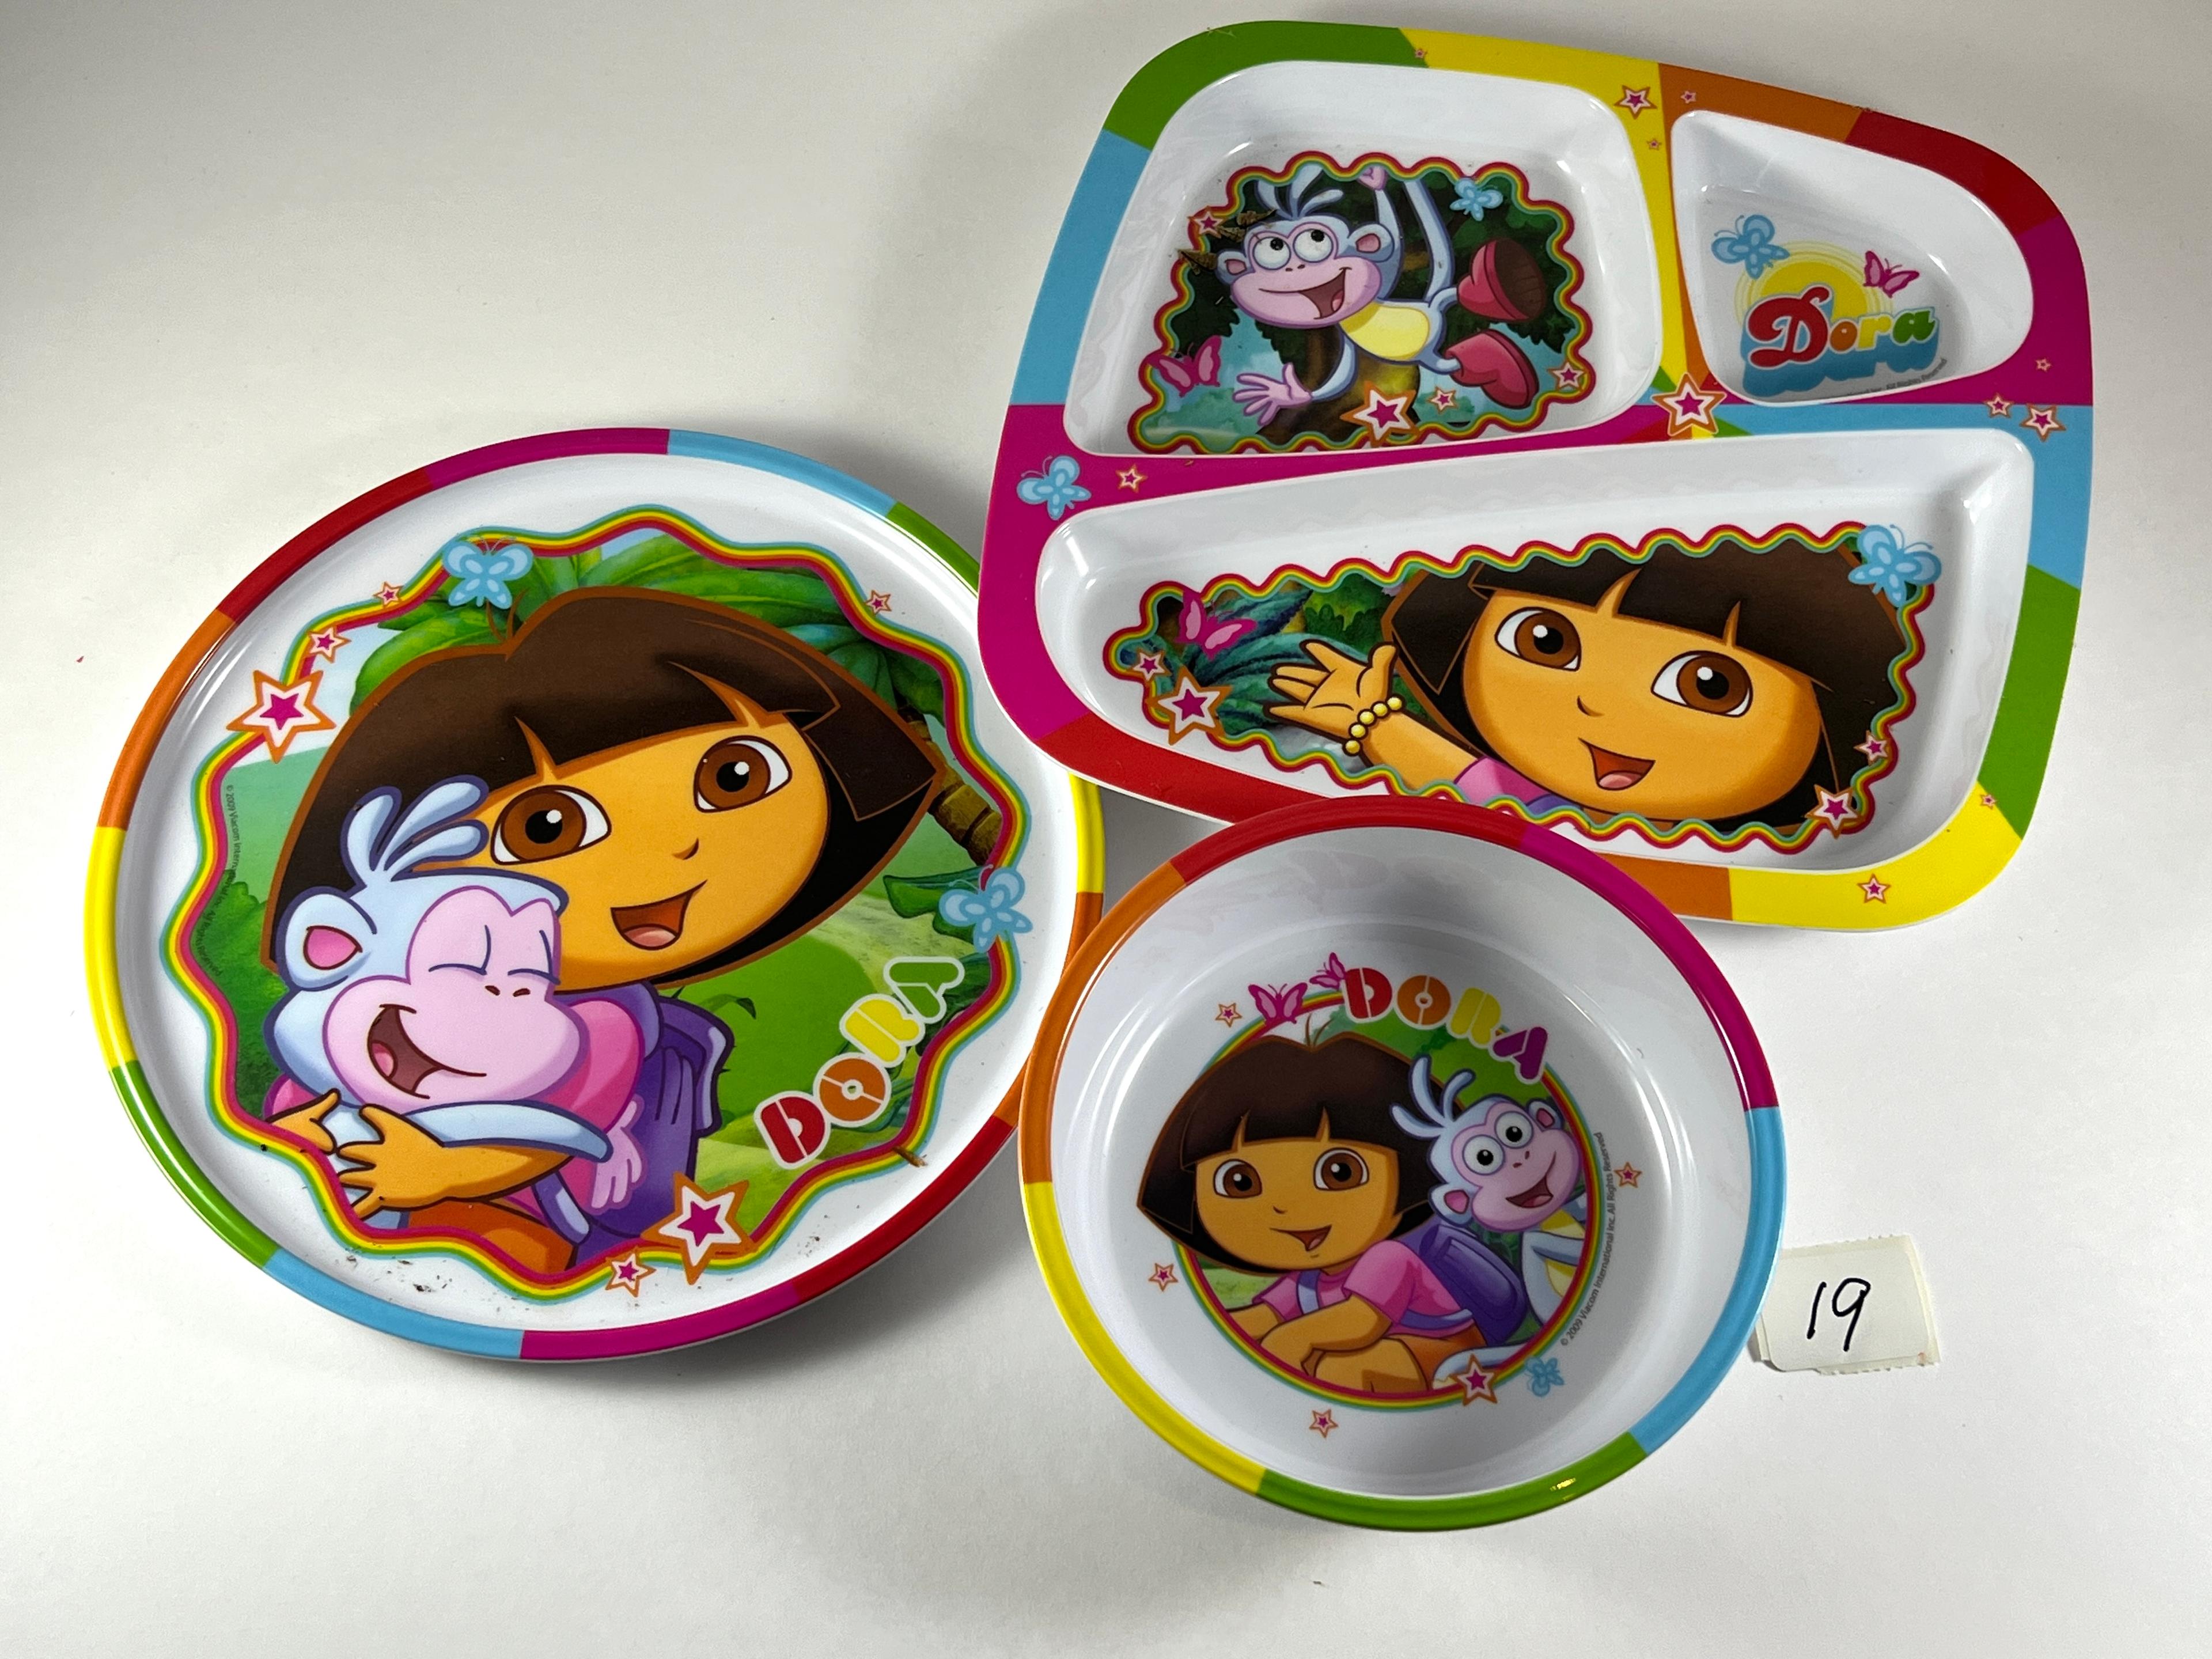 Dora the Explorer plastic plates